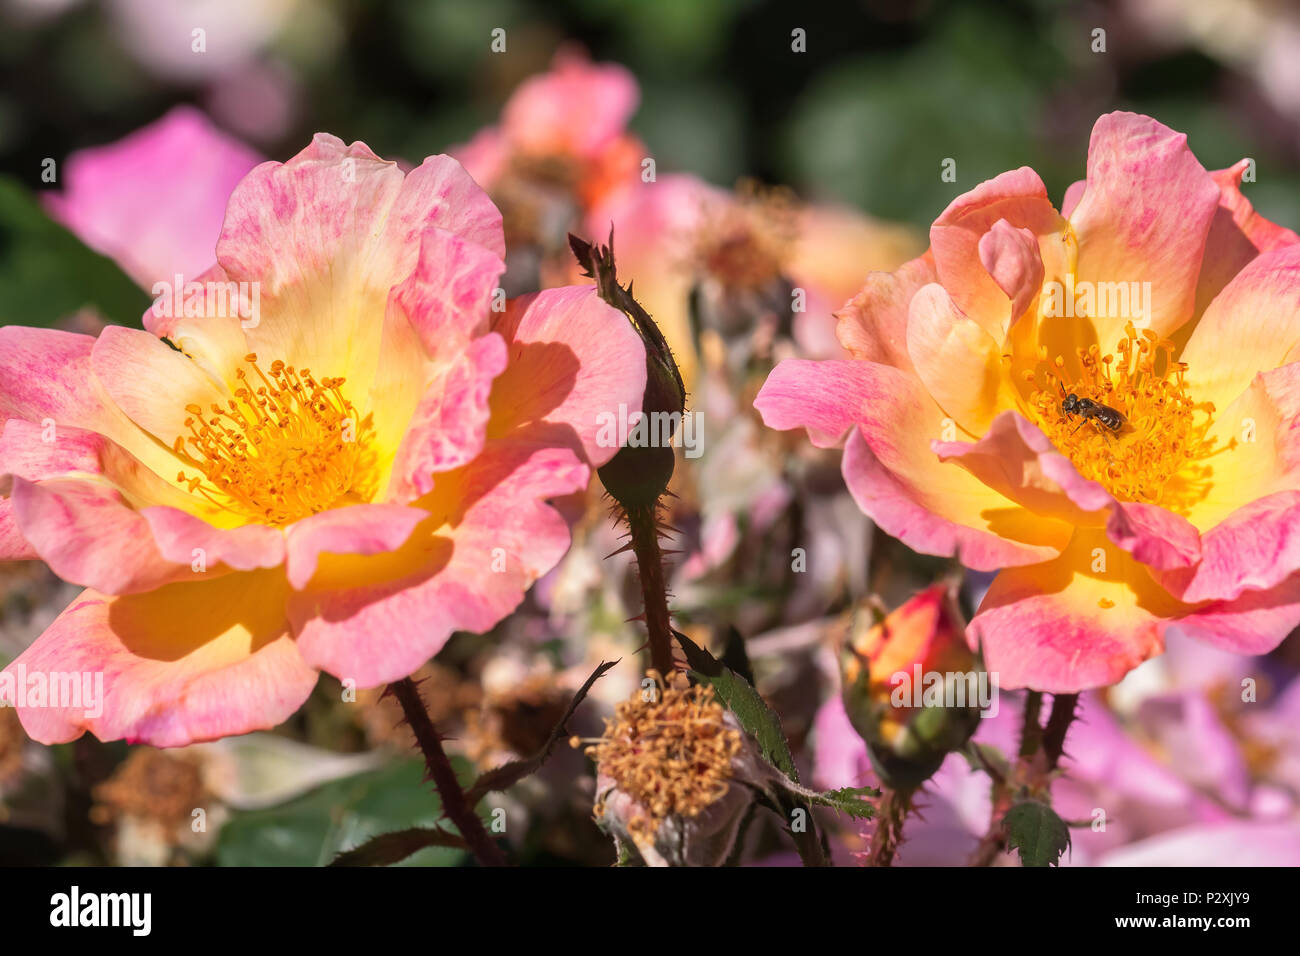 Western honey bee (Apis mellifera) and the roses, San Jose Municipal Rose Garden, California, United States. Stock Photo